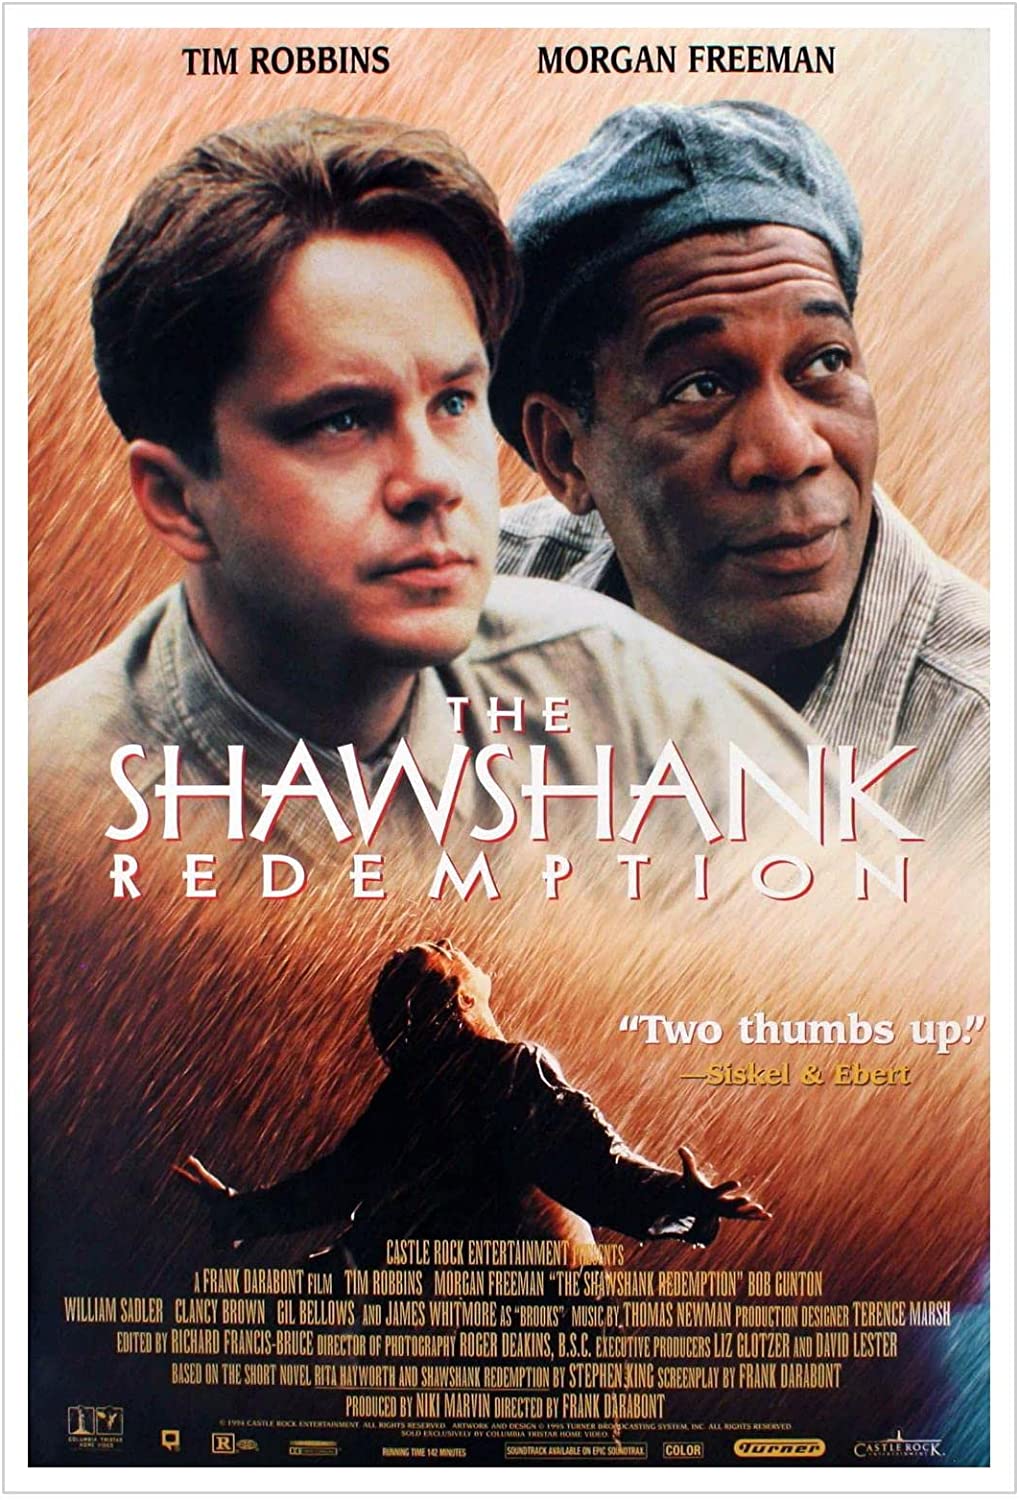 The Shawshank Redemption Hintergrundbild 1019x1500. The Shawshank Redemption Movie Tim Robbins Poster Vintage Movie Poster Room Aesthetics Canvas Prints Wall Art For Home Office Decorations Unframed 36X24